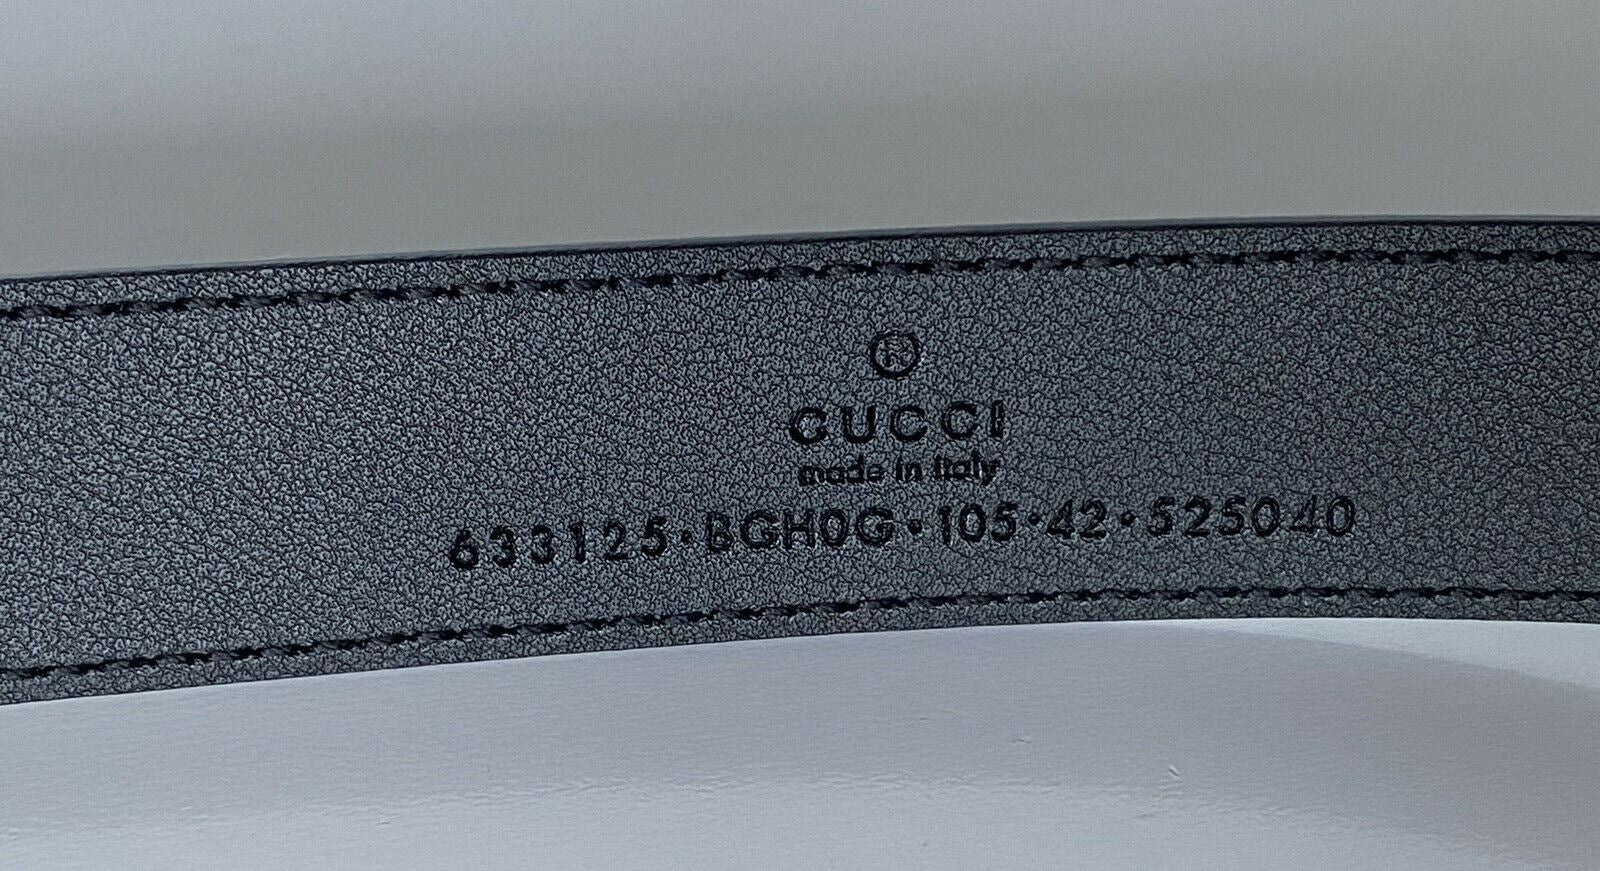 New Gucci Men's Horsebit Calf Leather Belt Black 105/42 Made in Italy 633125